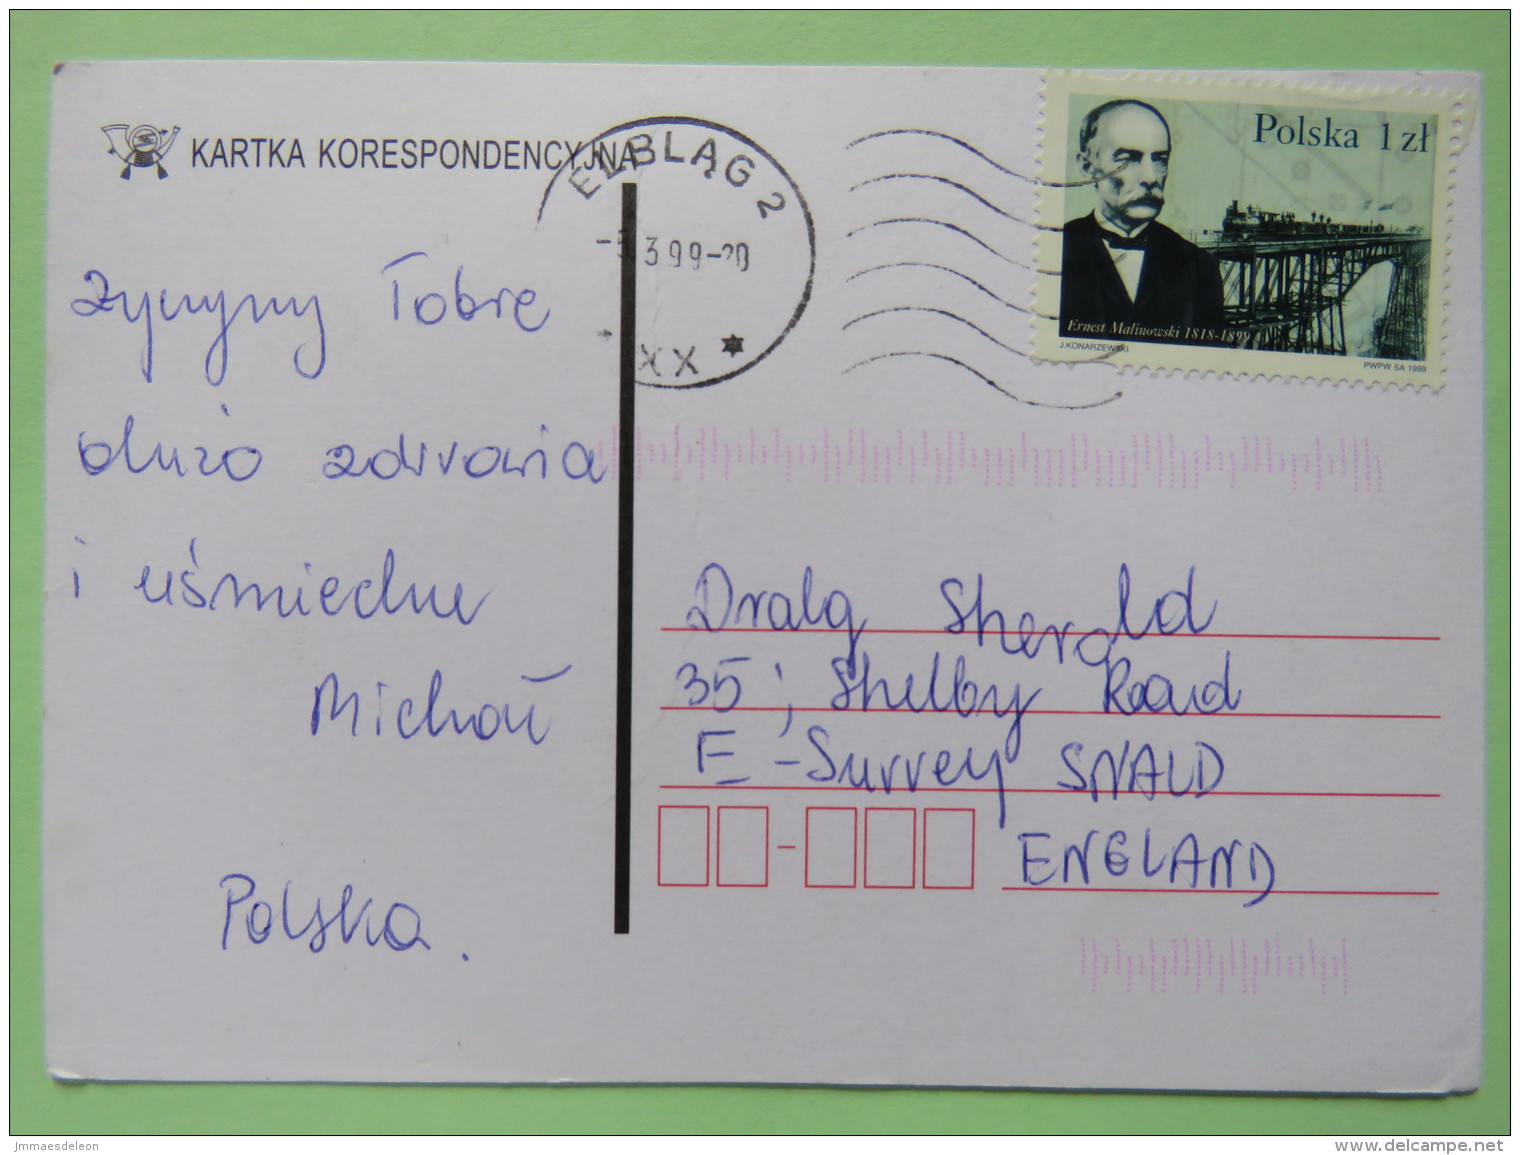 Poland 1999 Postcard Elblag To England - Malinowski Constructor Andean Train Peru - Covers & Documents